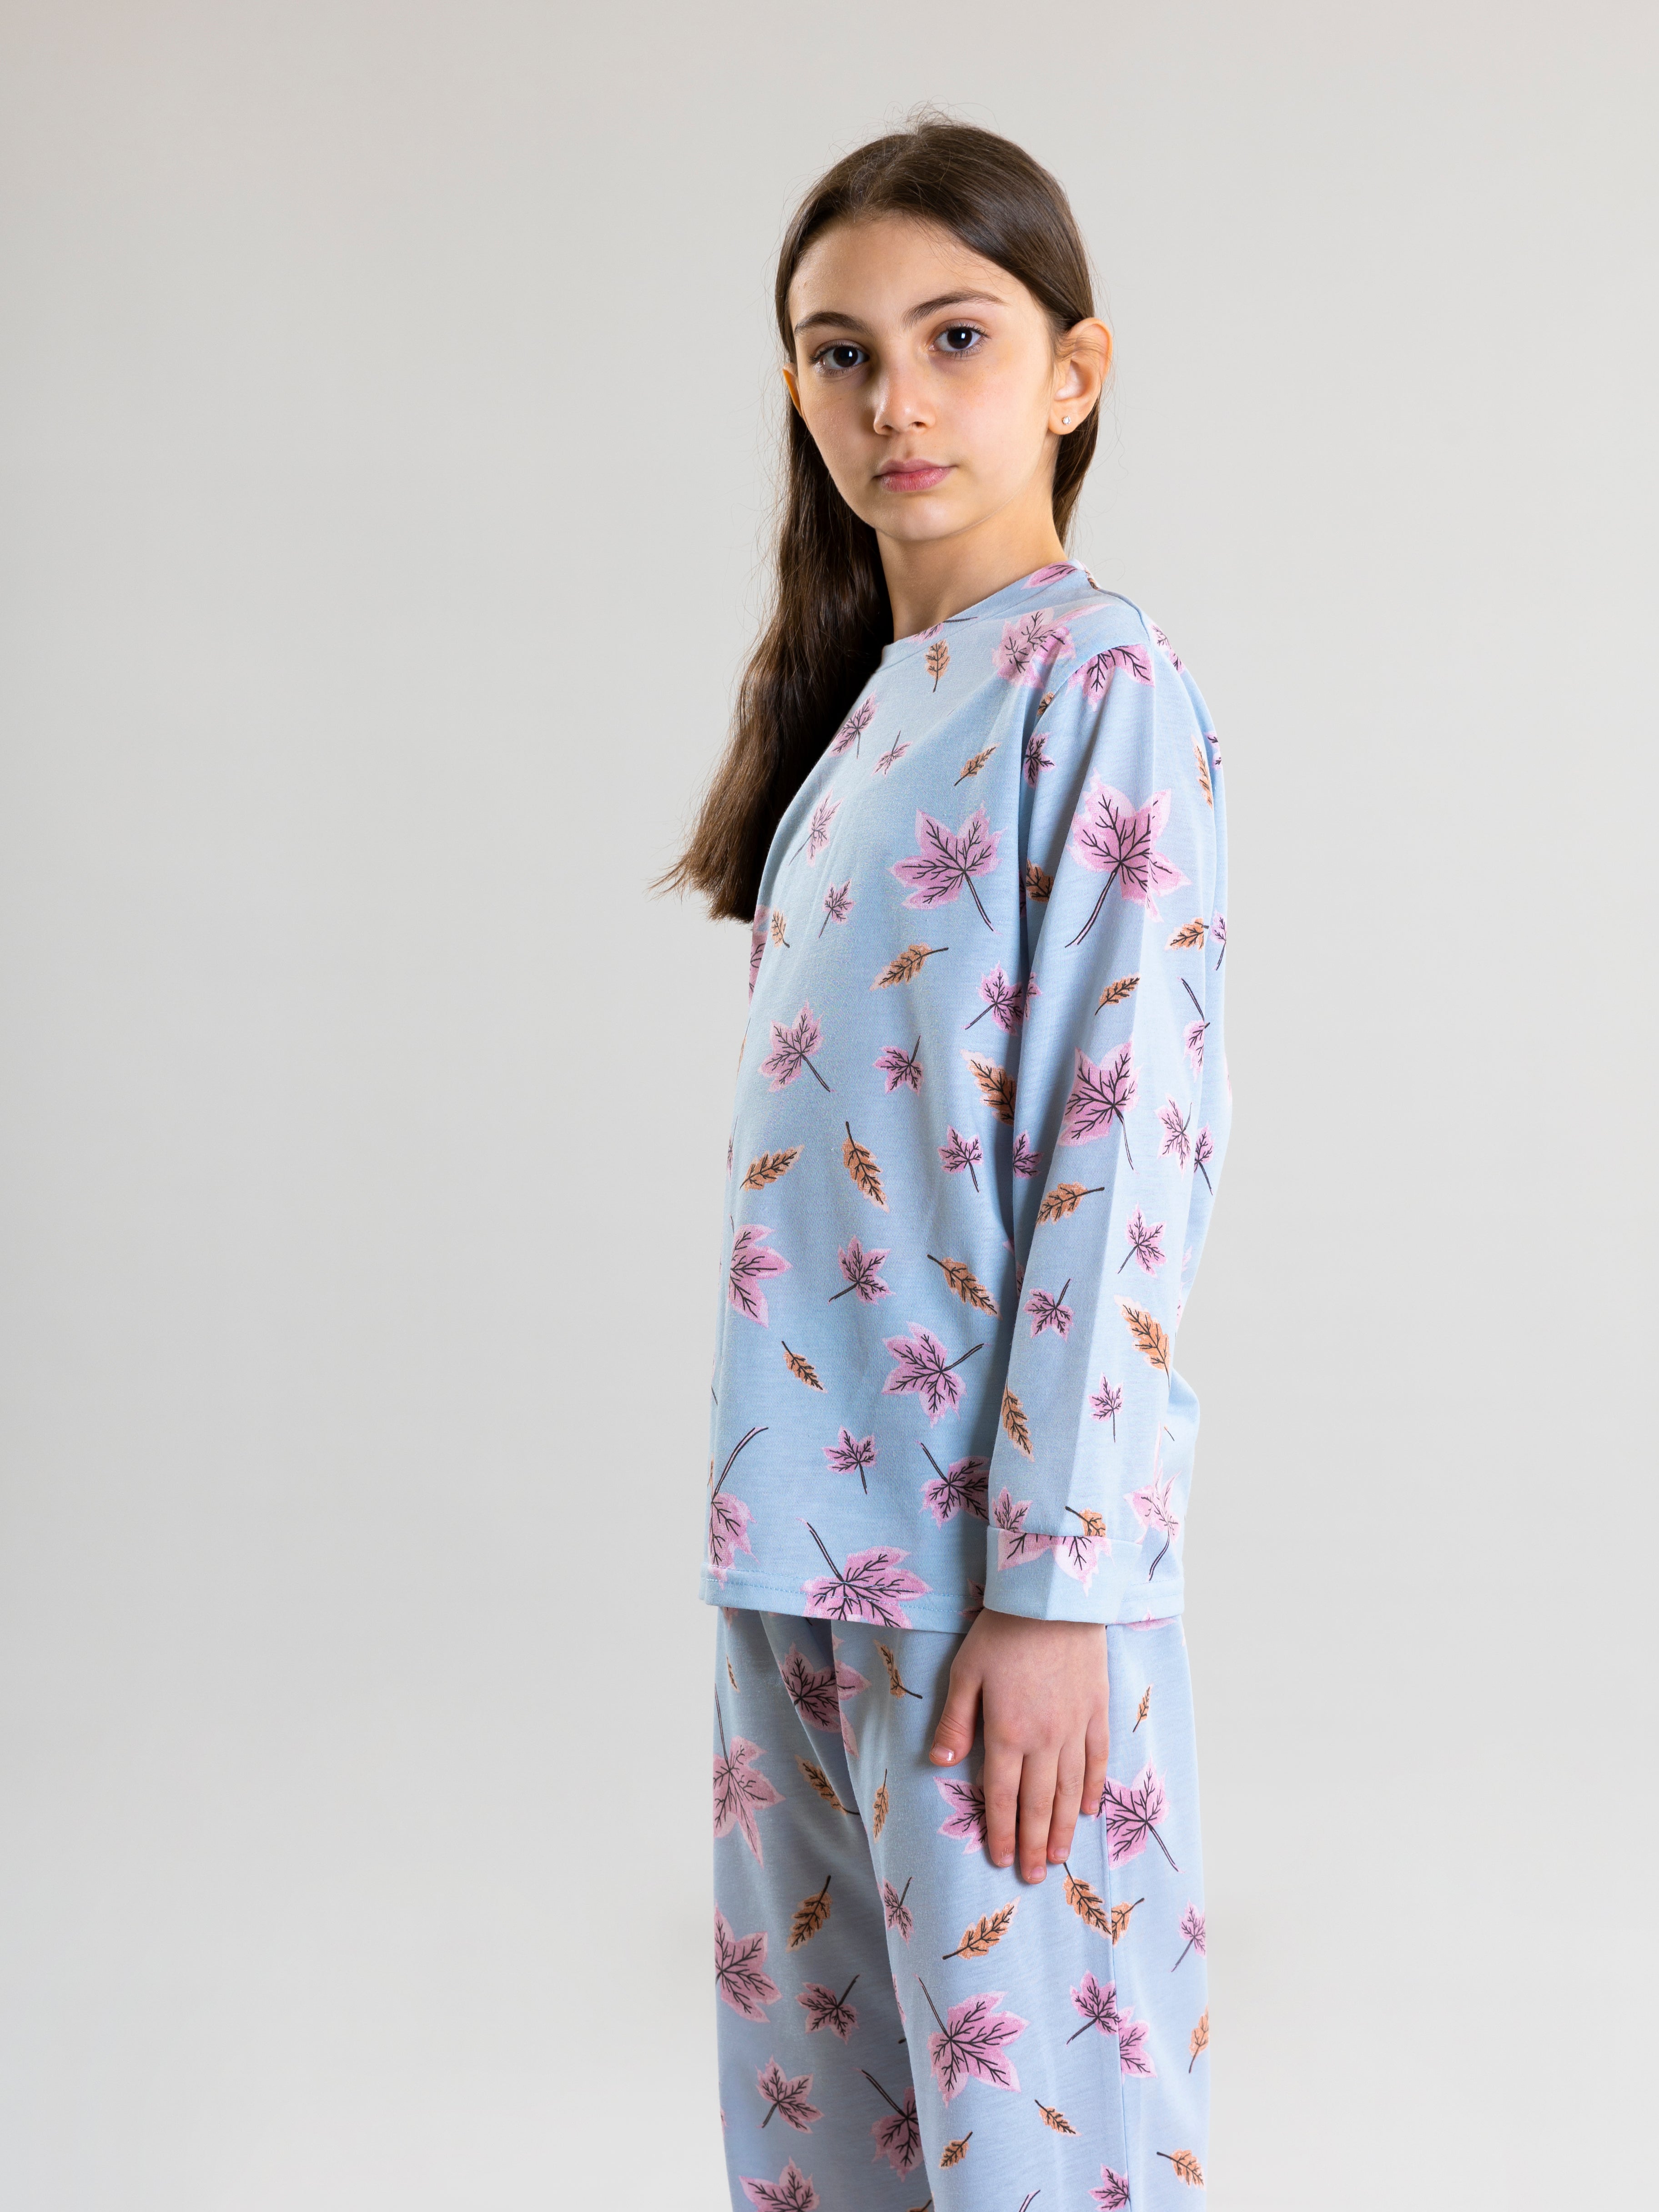 Autumn Leaves Pyjama Set For Girls - Blue - Pear